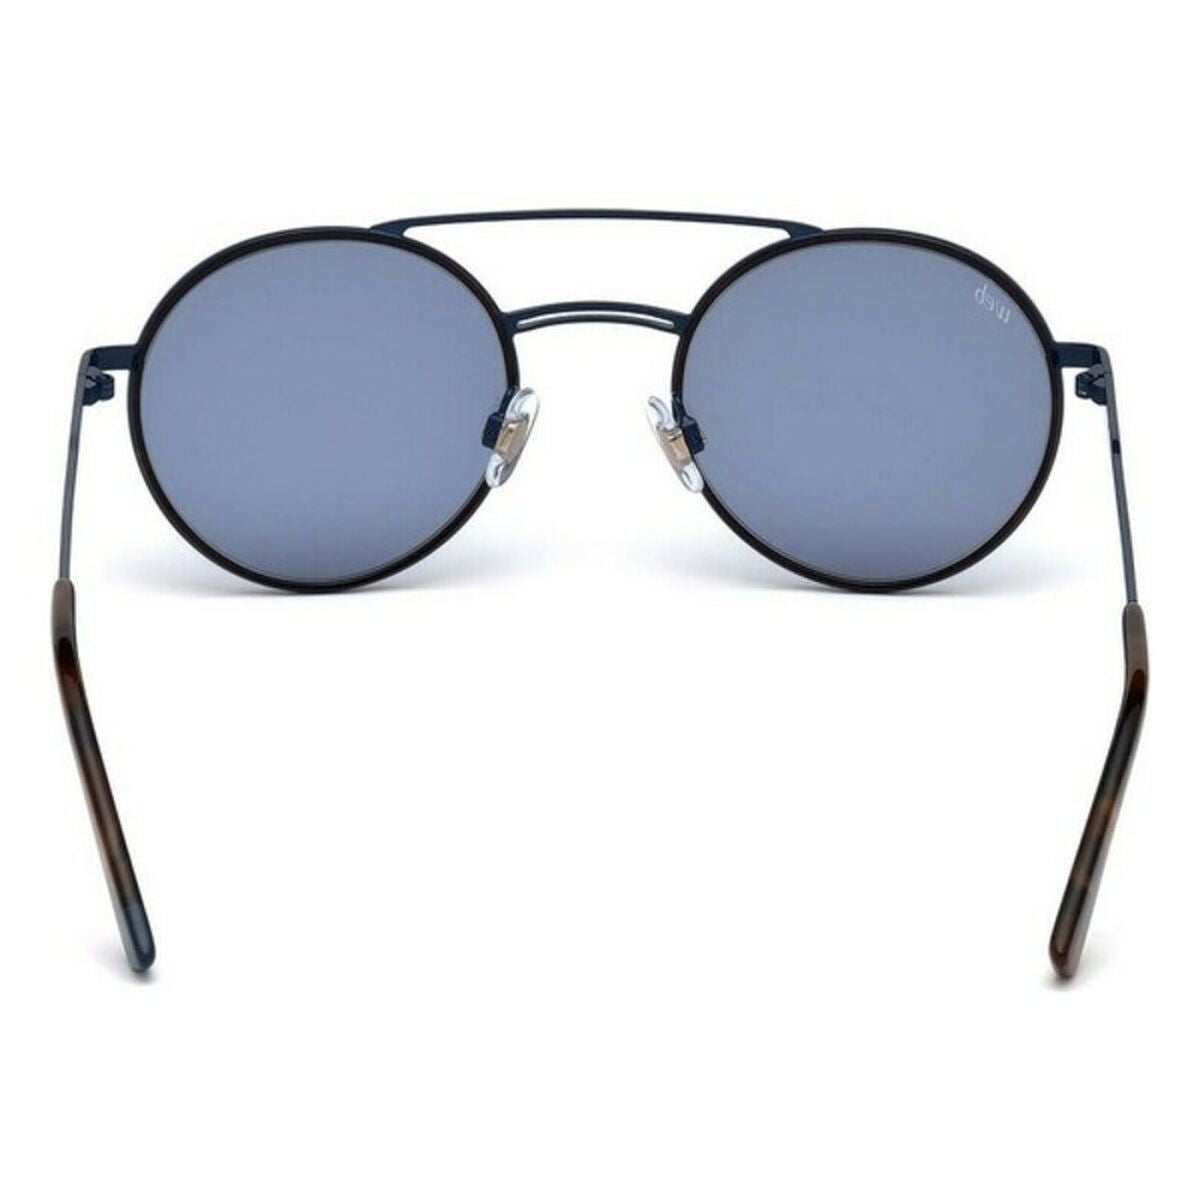 Men's Sunglasses Web Eyewear WE0233A